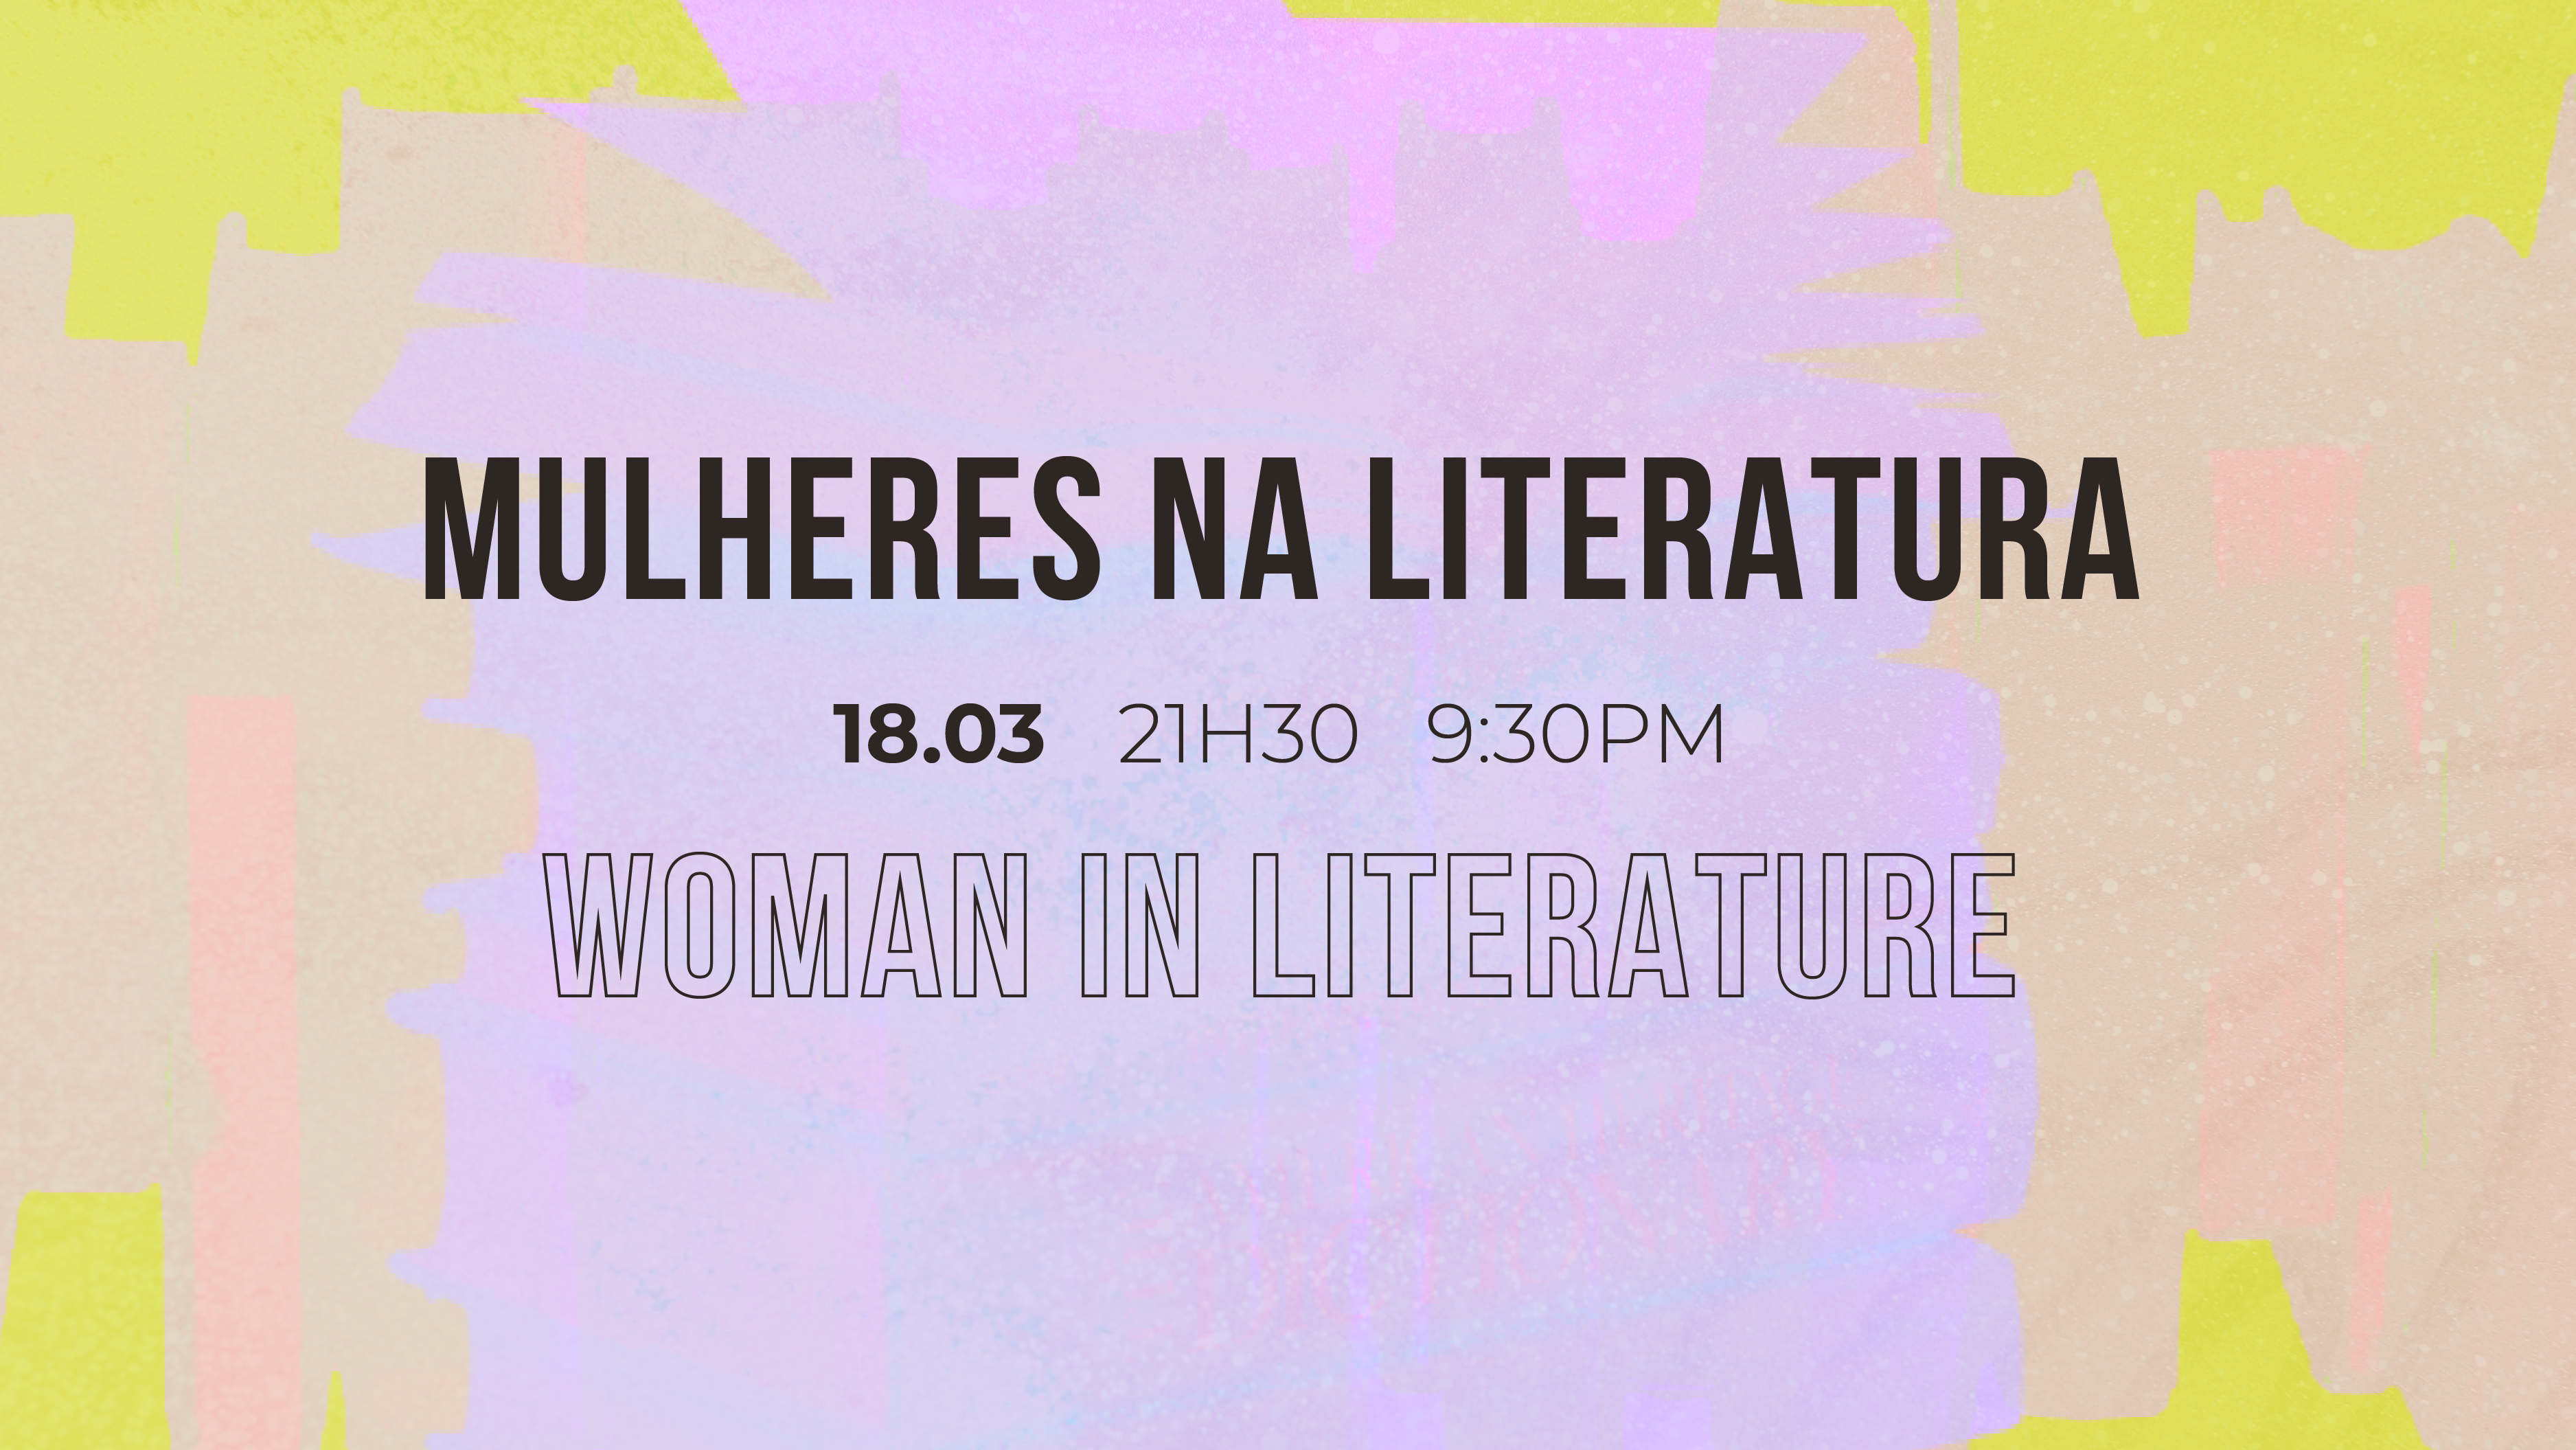 Session "Women in Literature